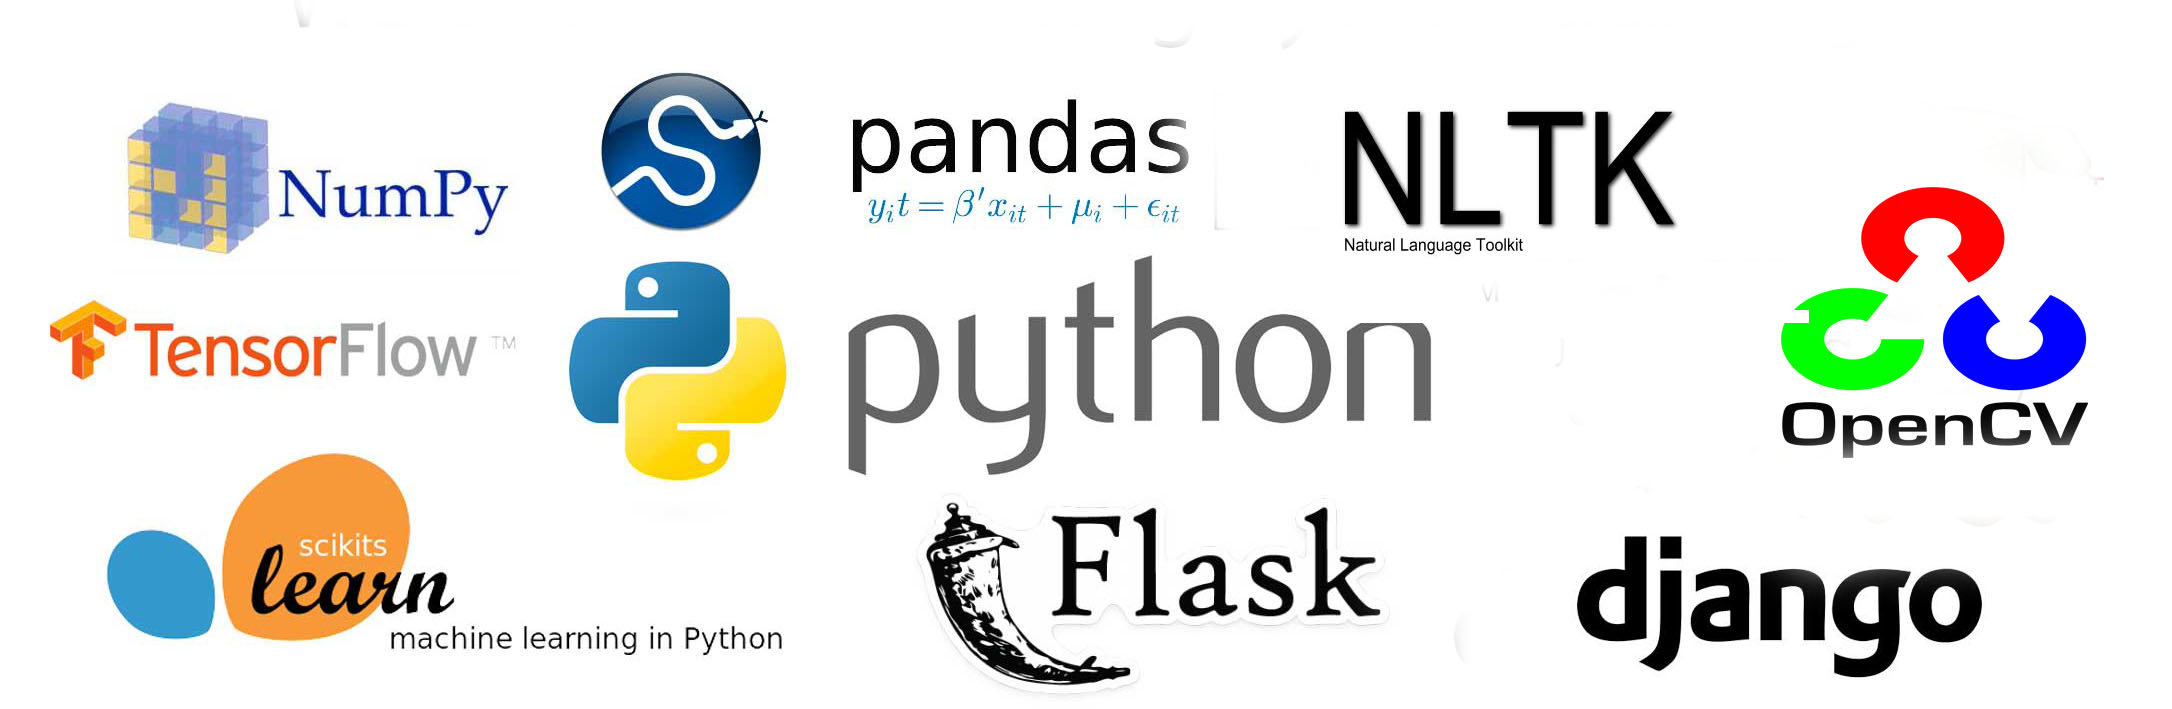 Spacy python. Питон NLTK. NLTK (natural language Toolkit). NLTK NLP. NLTK logo.